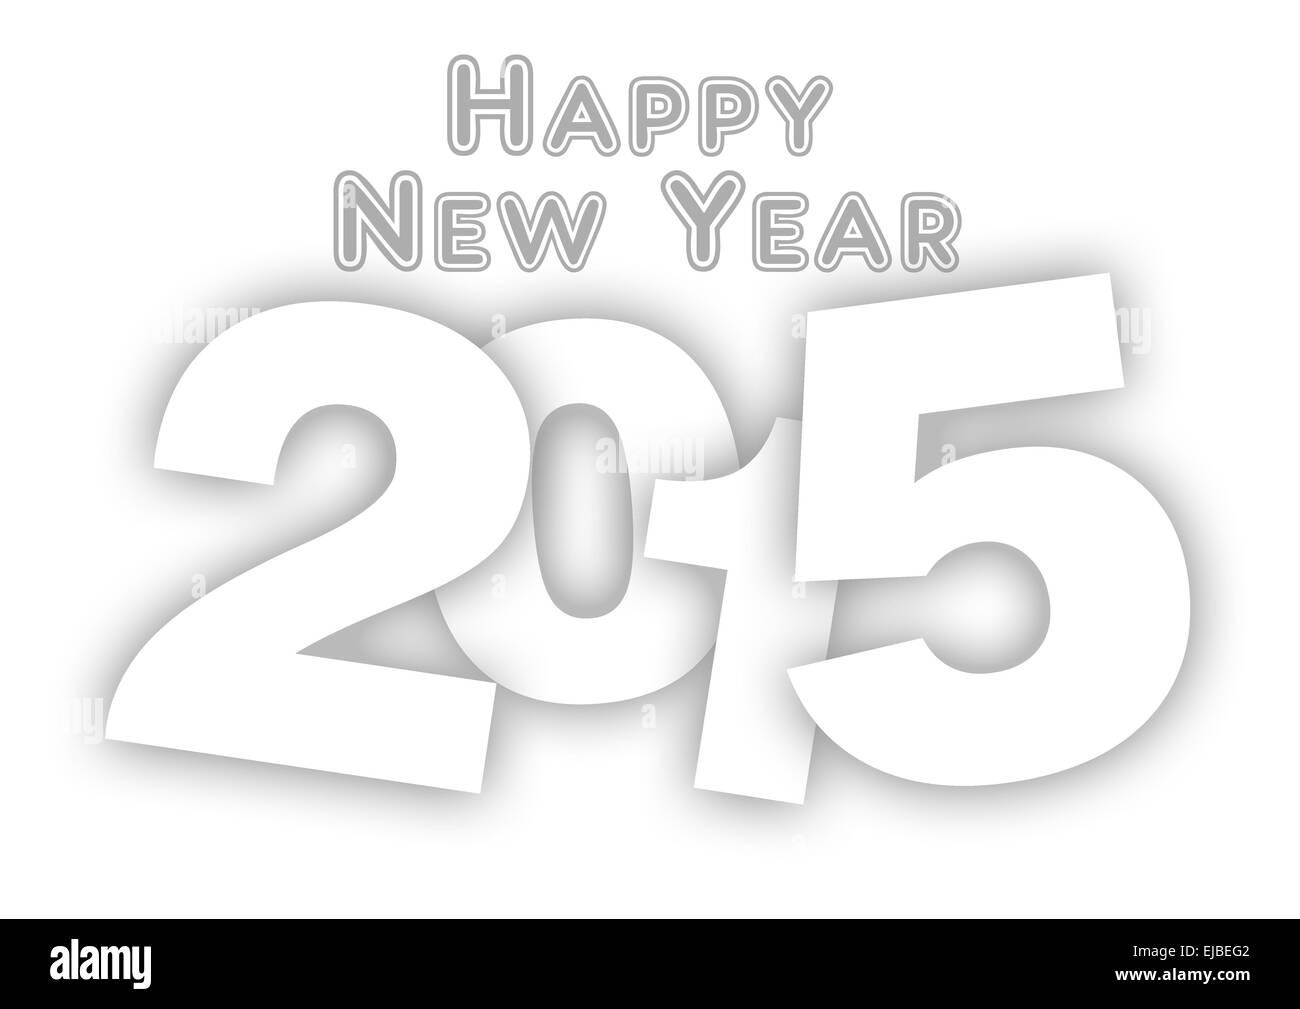 Happy new year 2015 Stock Photo